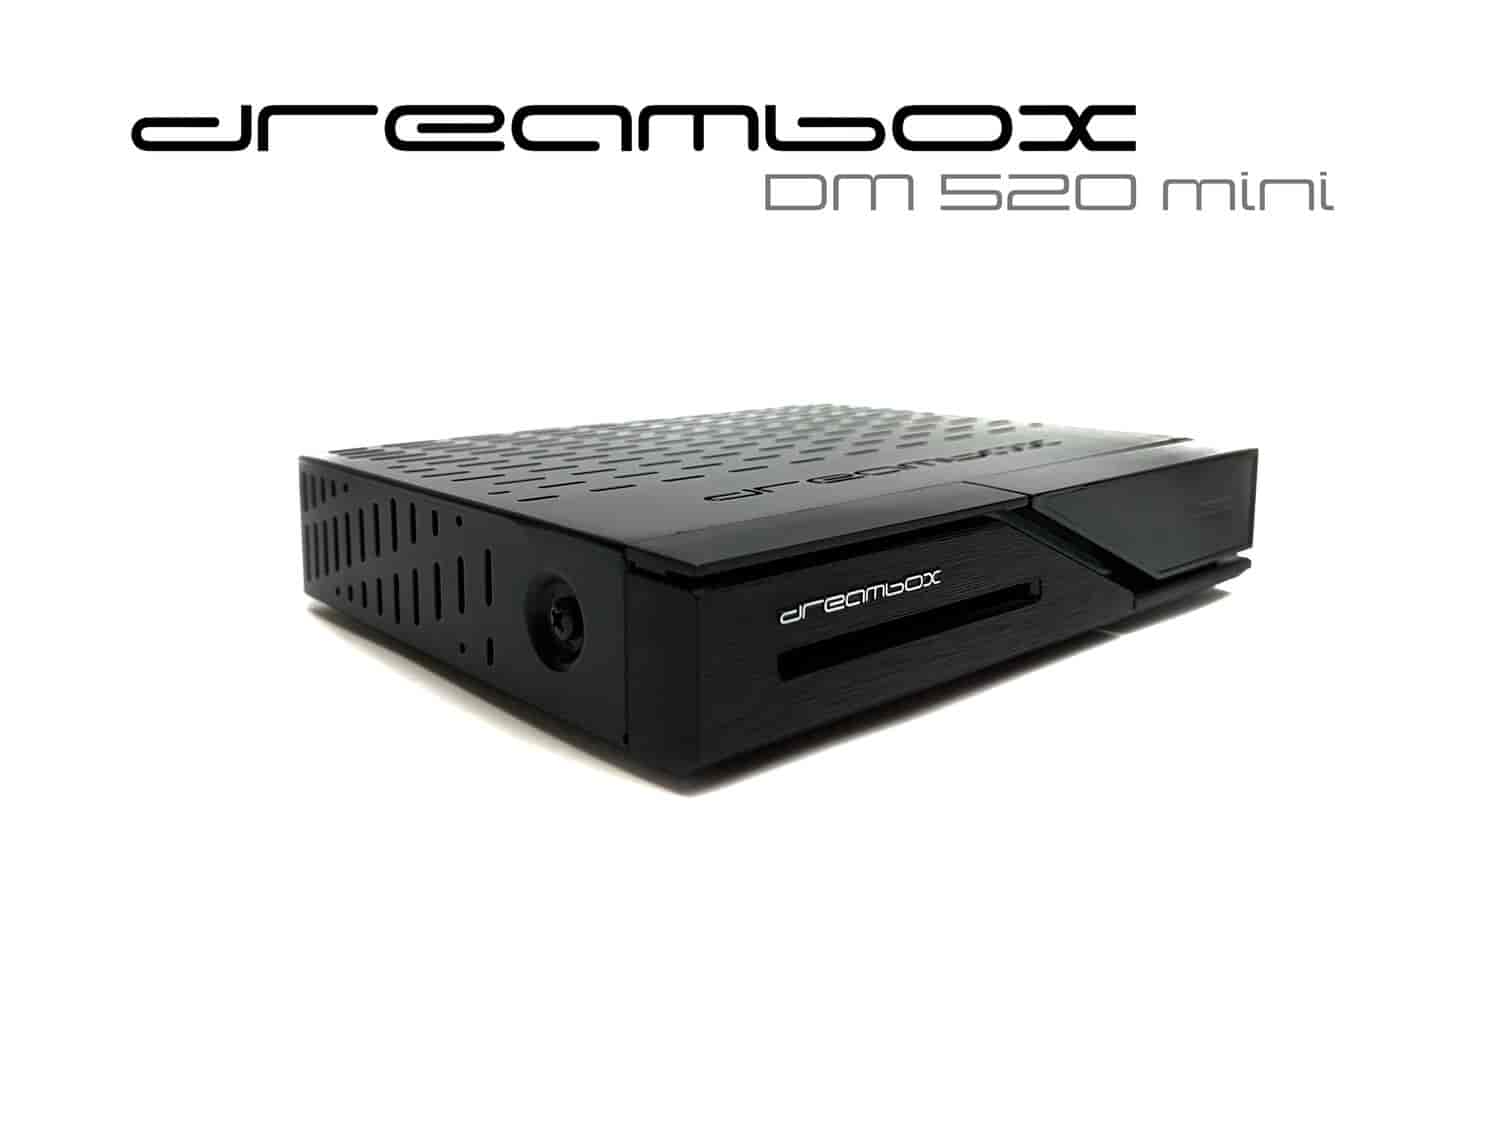 Dreambox DM520 Mini - hurtig parabolmodtager